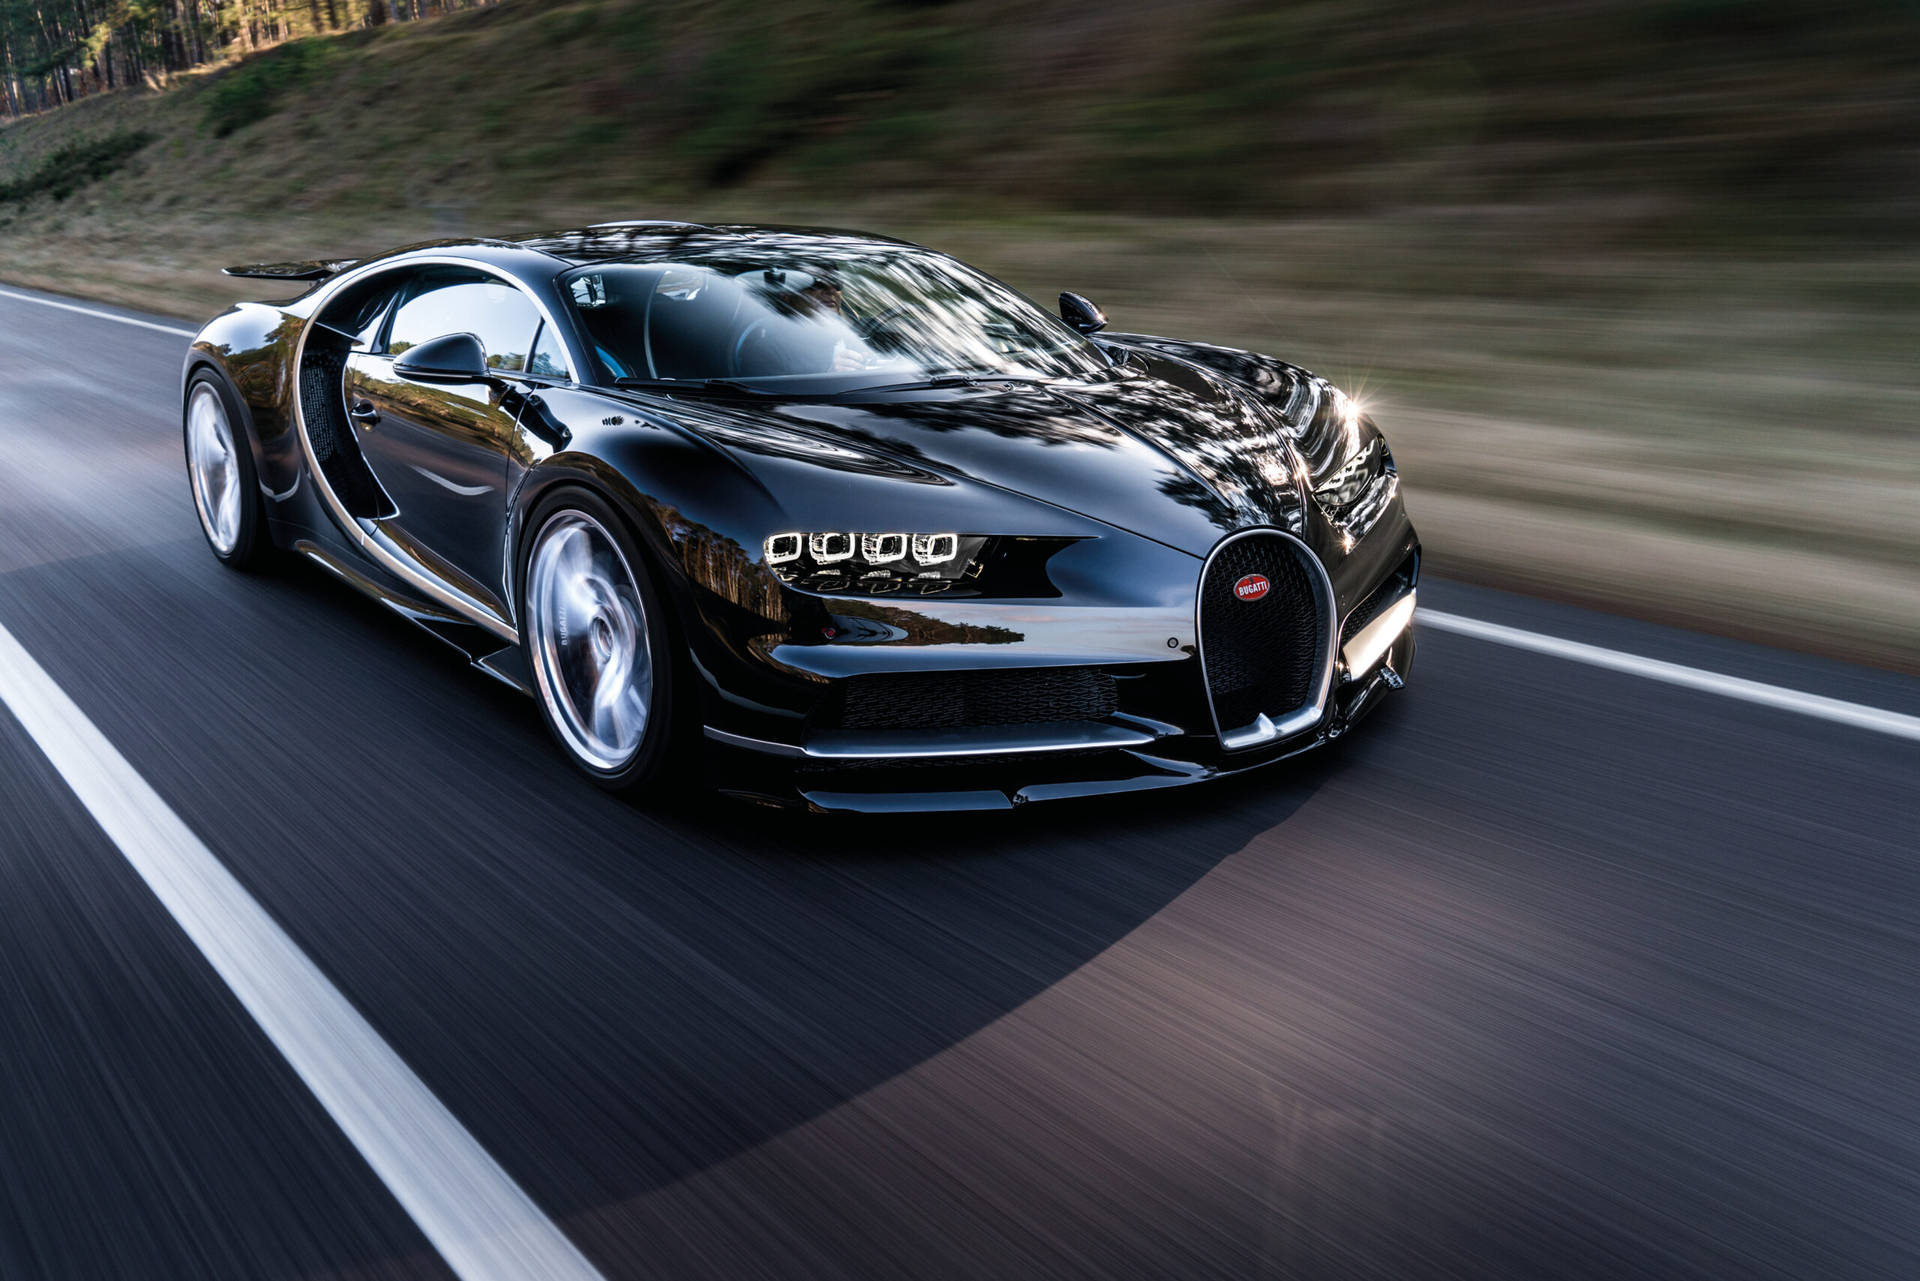 Speeding Cool Bugatti On Road